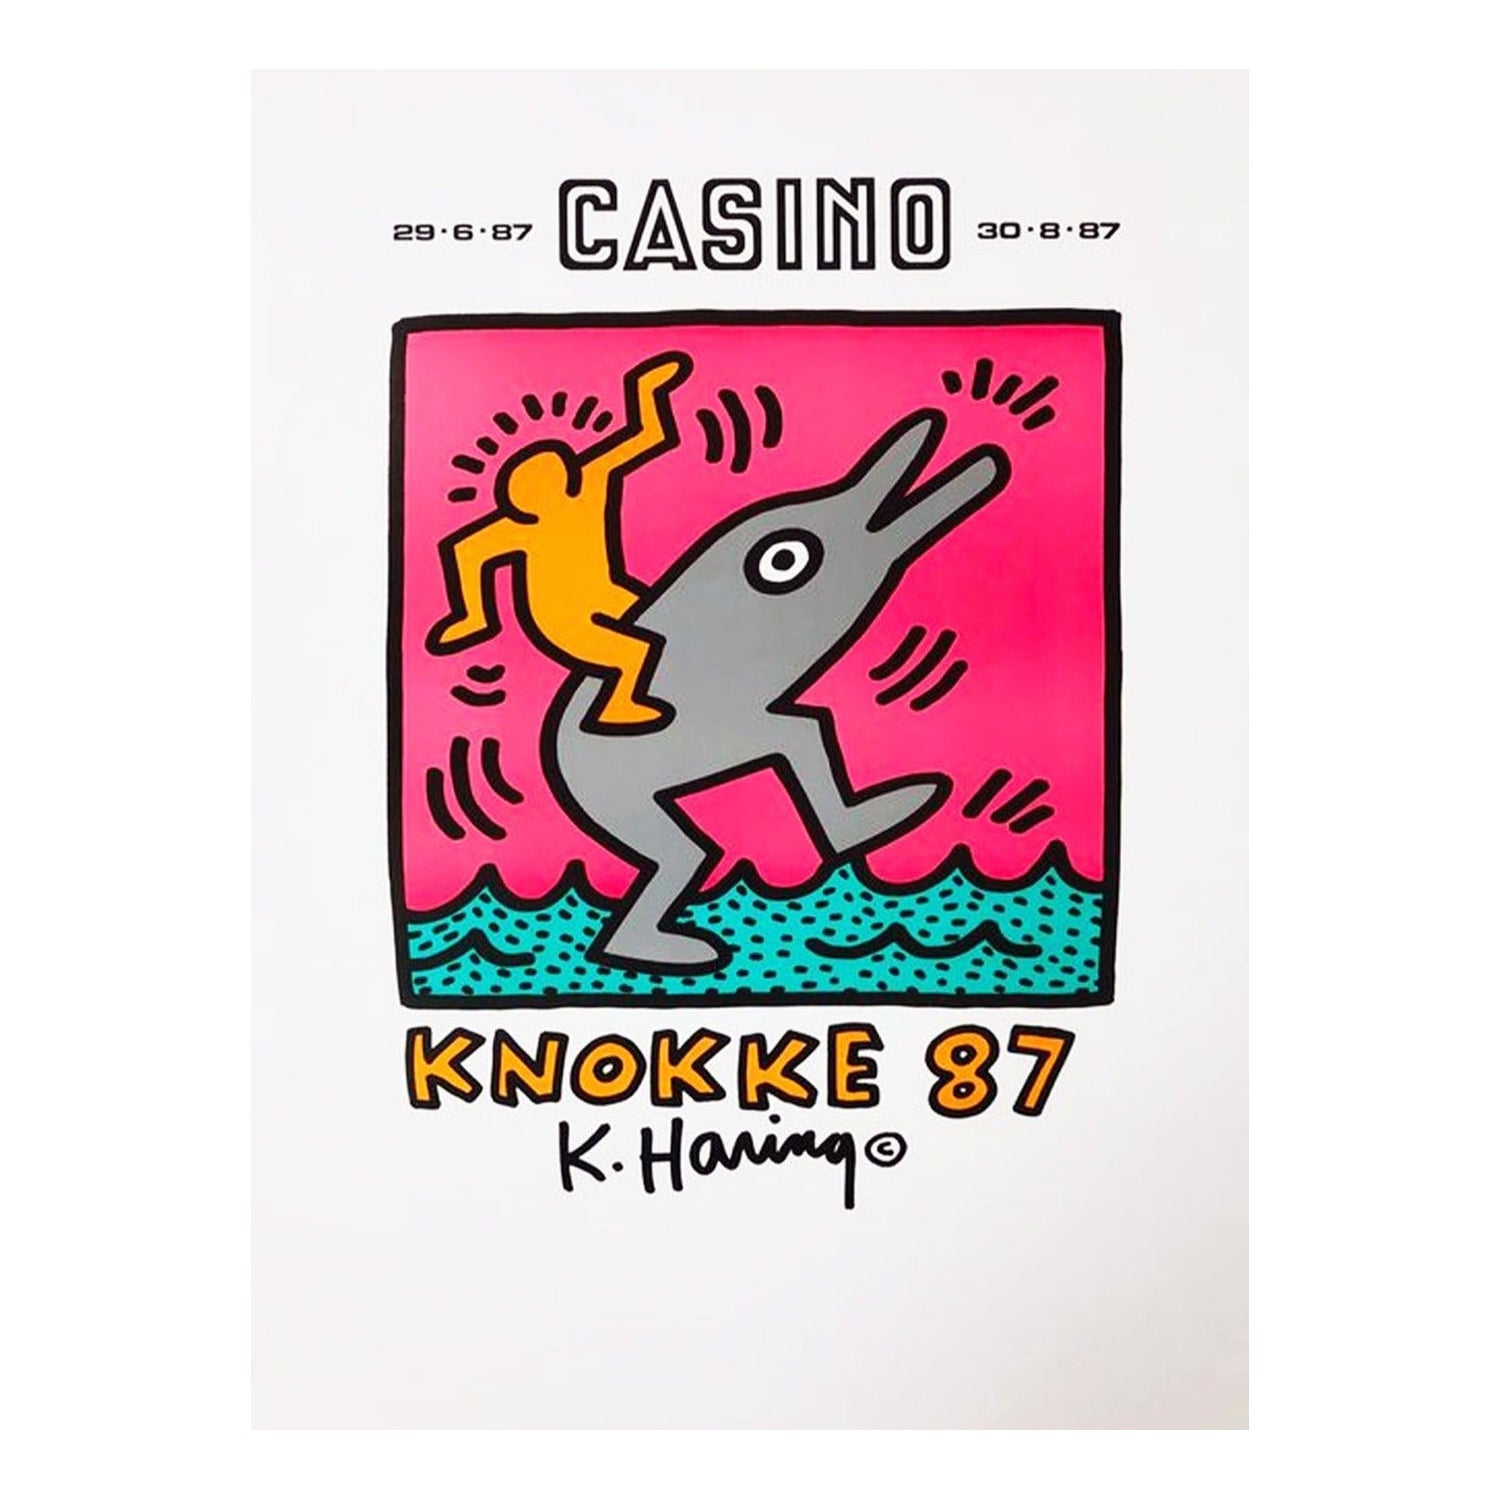 1987 Keith Haring, Casino Knokke Original Vintage Poster